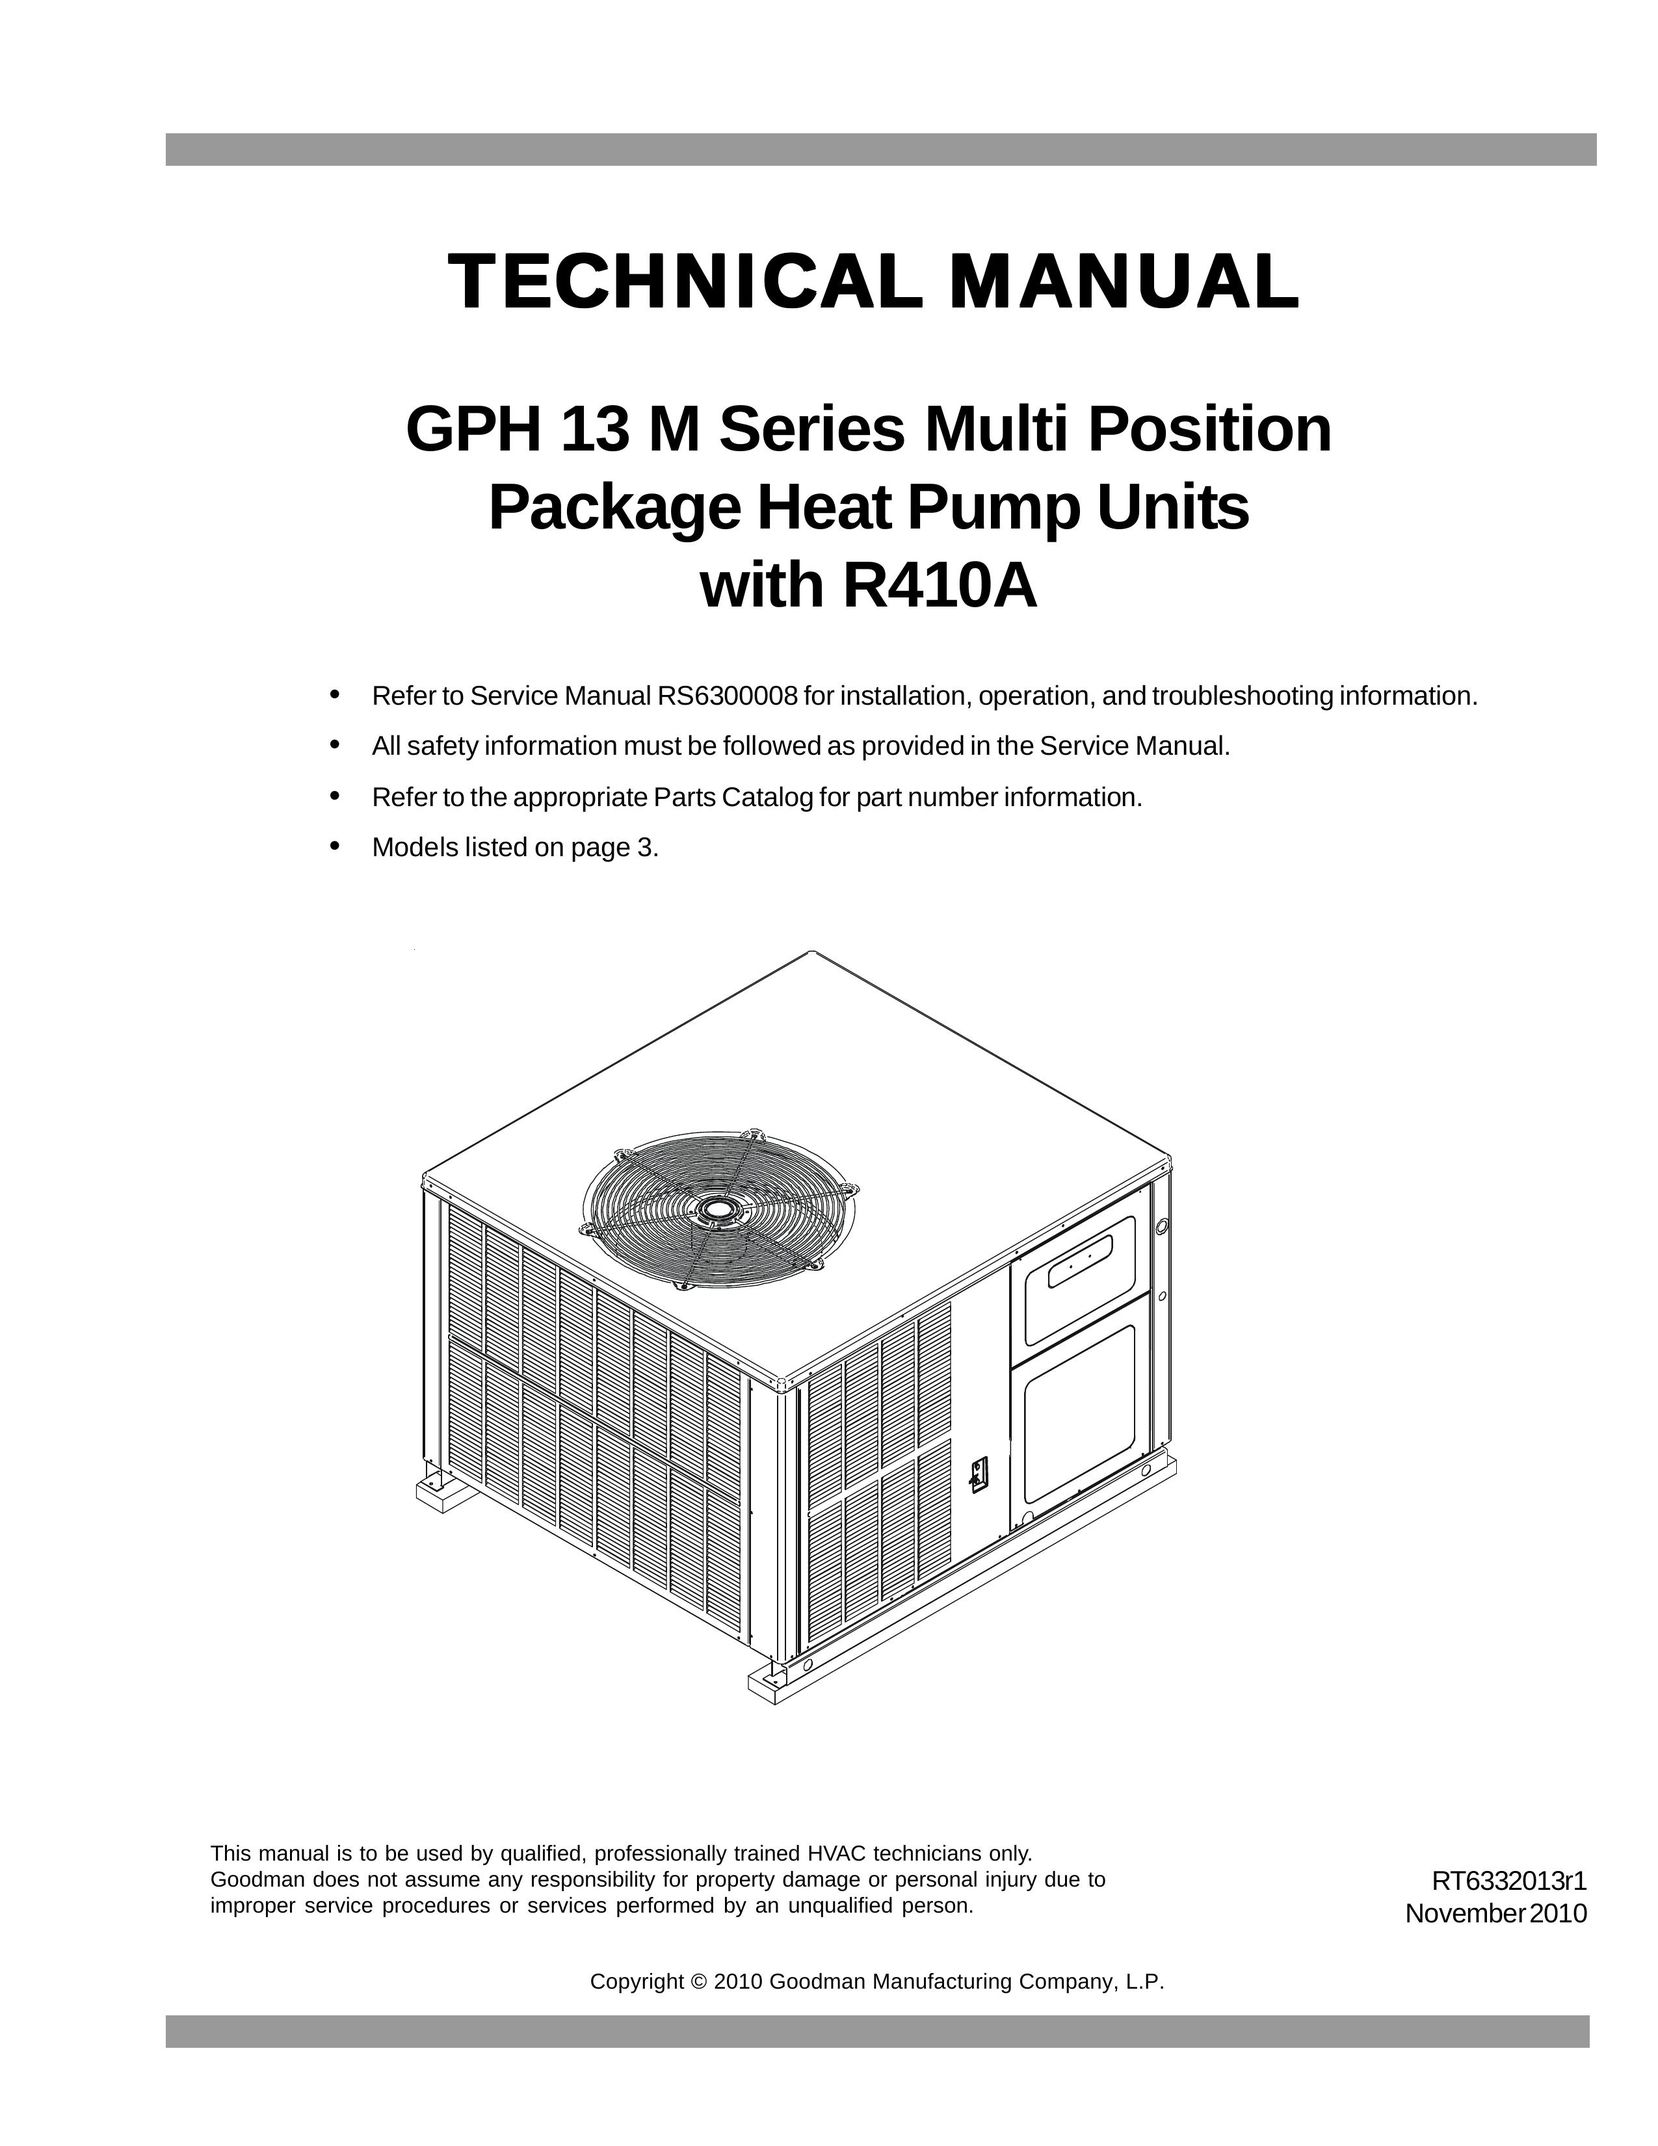 Goodman Mfg RT6332013r1 Heat Pump User Manual